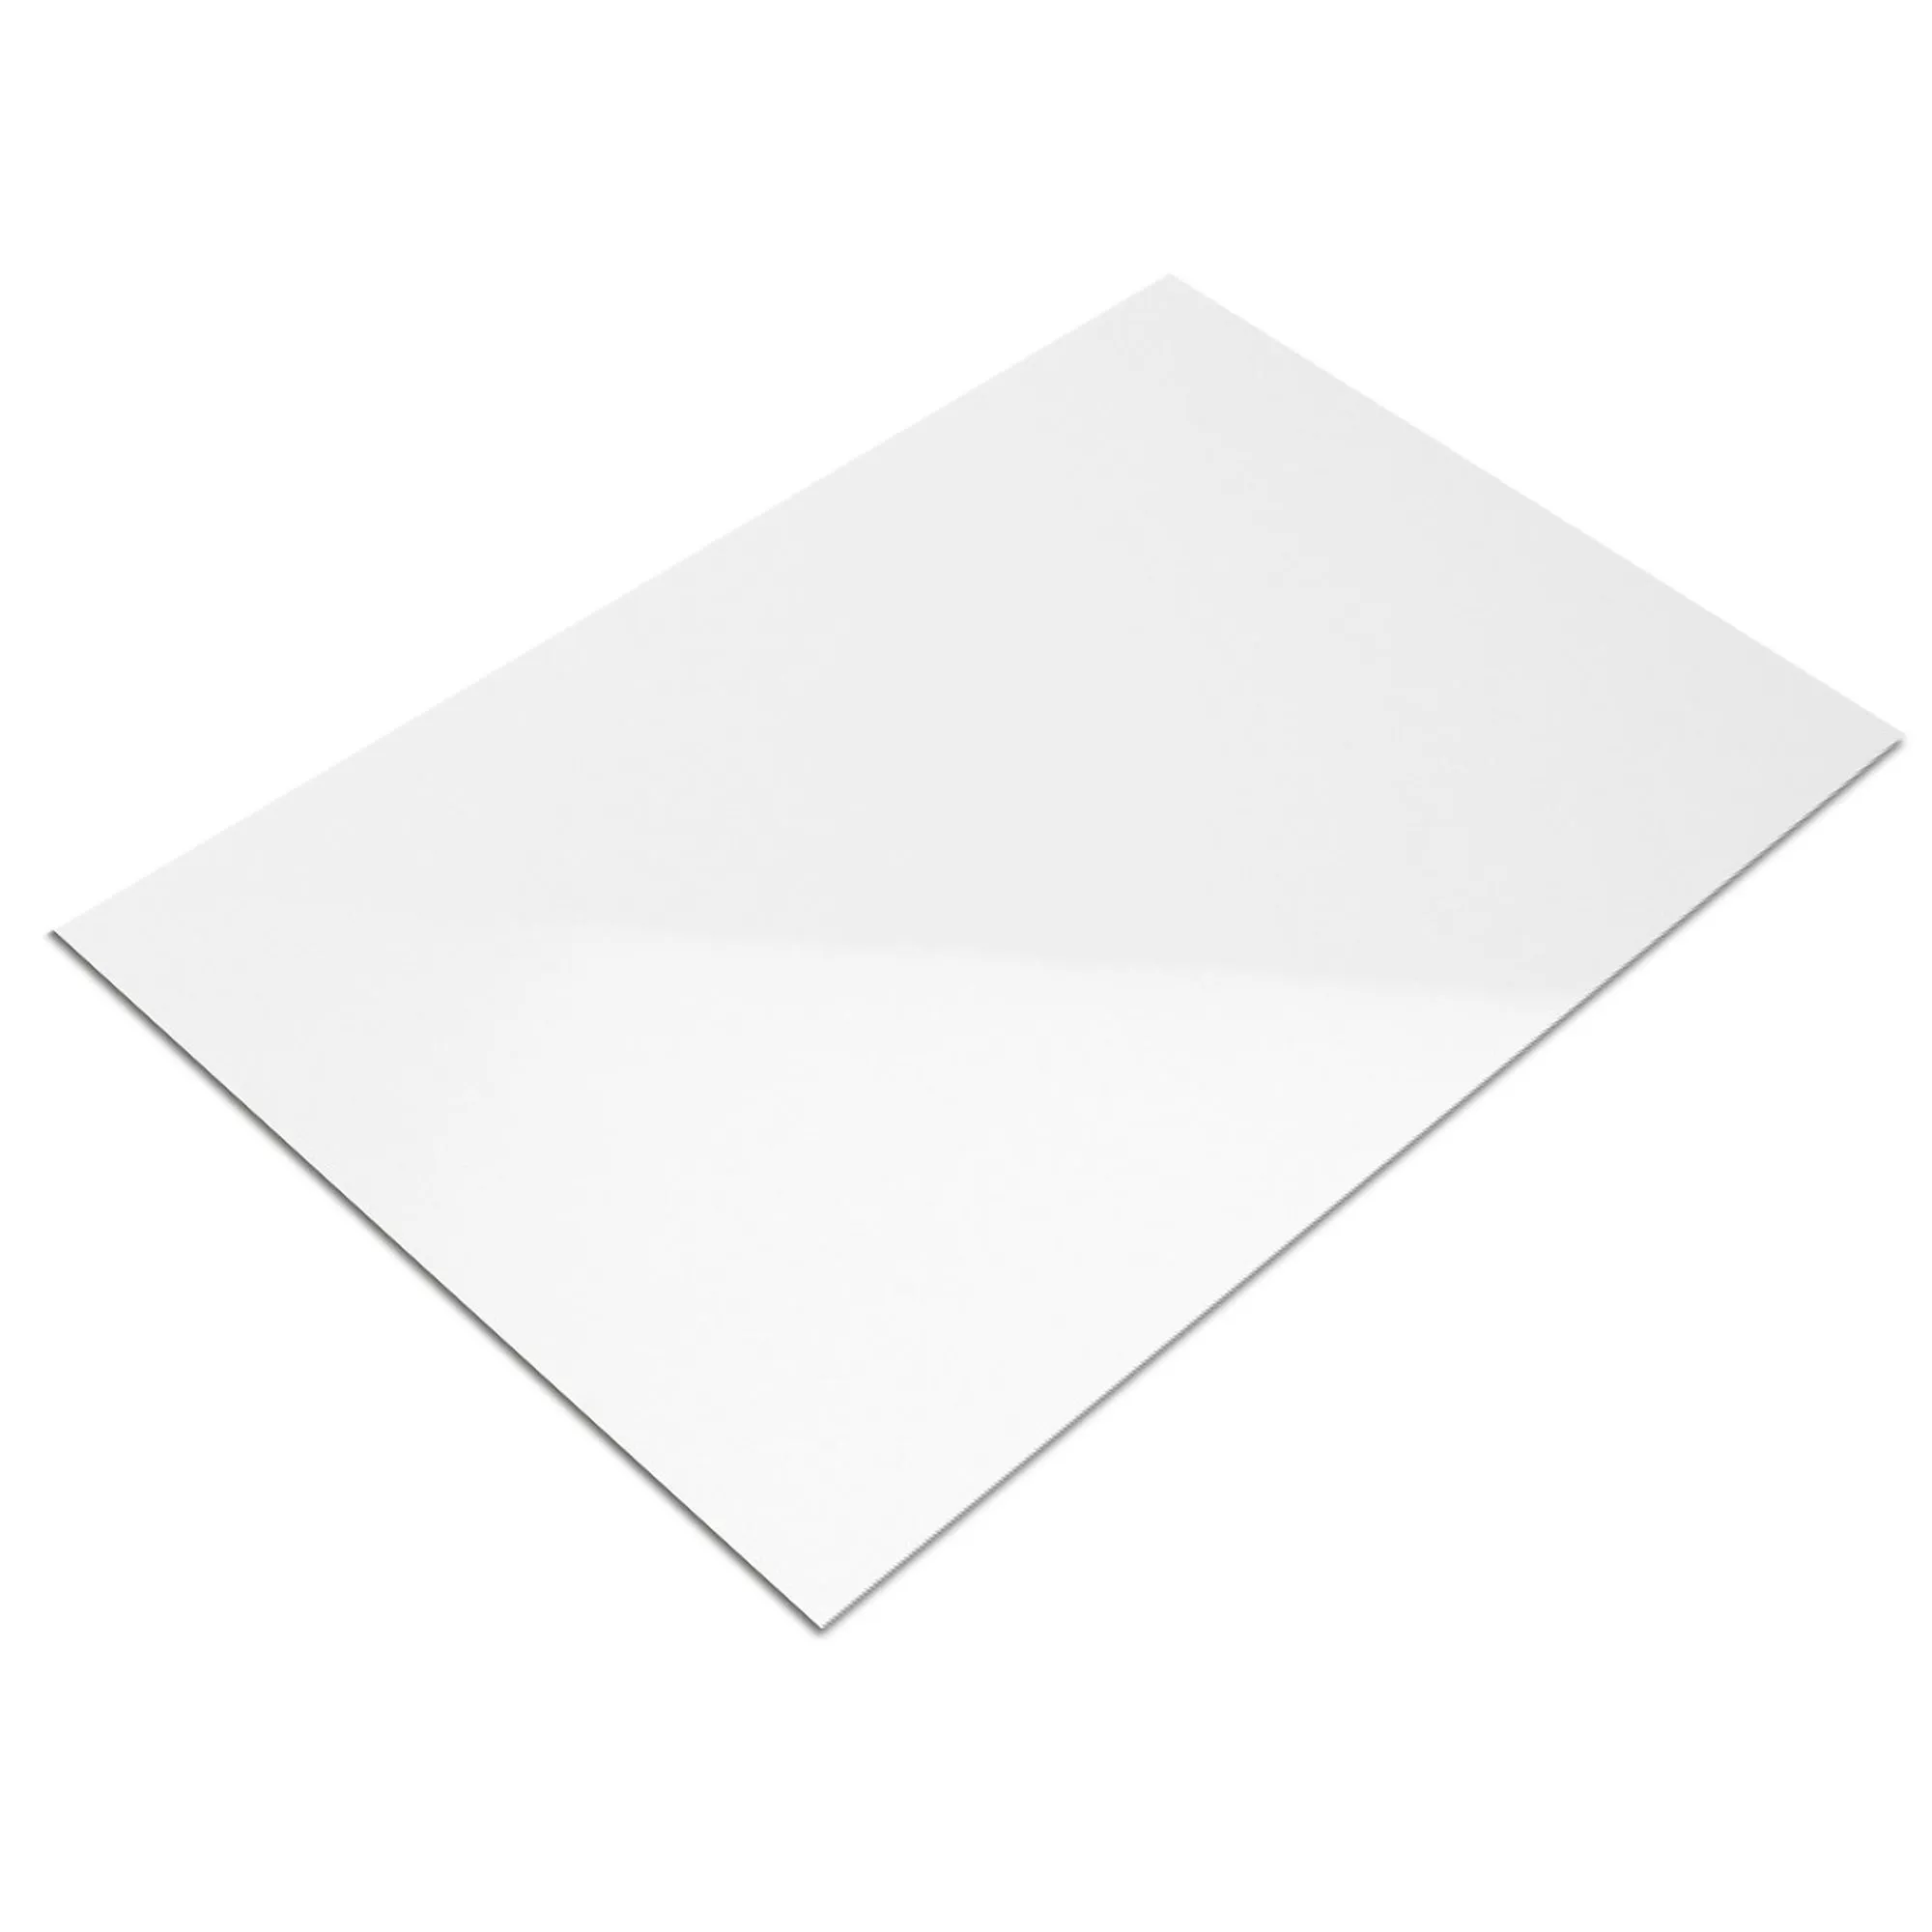 Sample Wall Tiles Fenway White Glossy 30x60cm